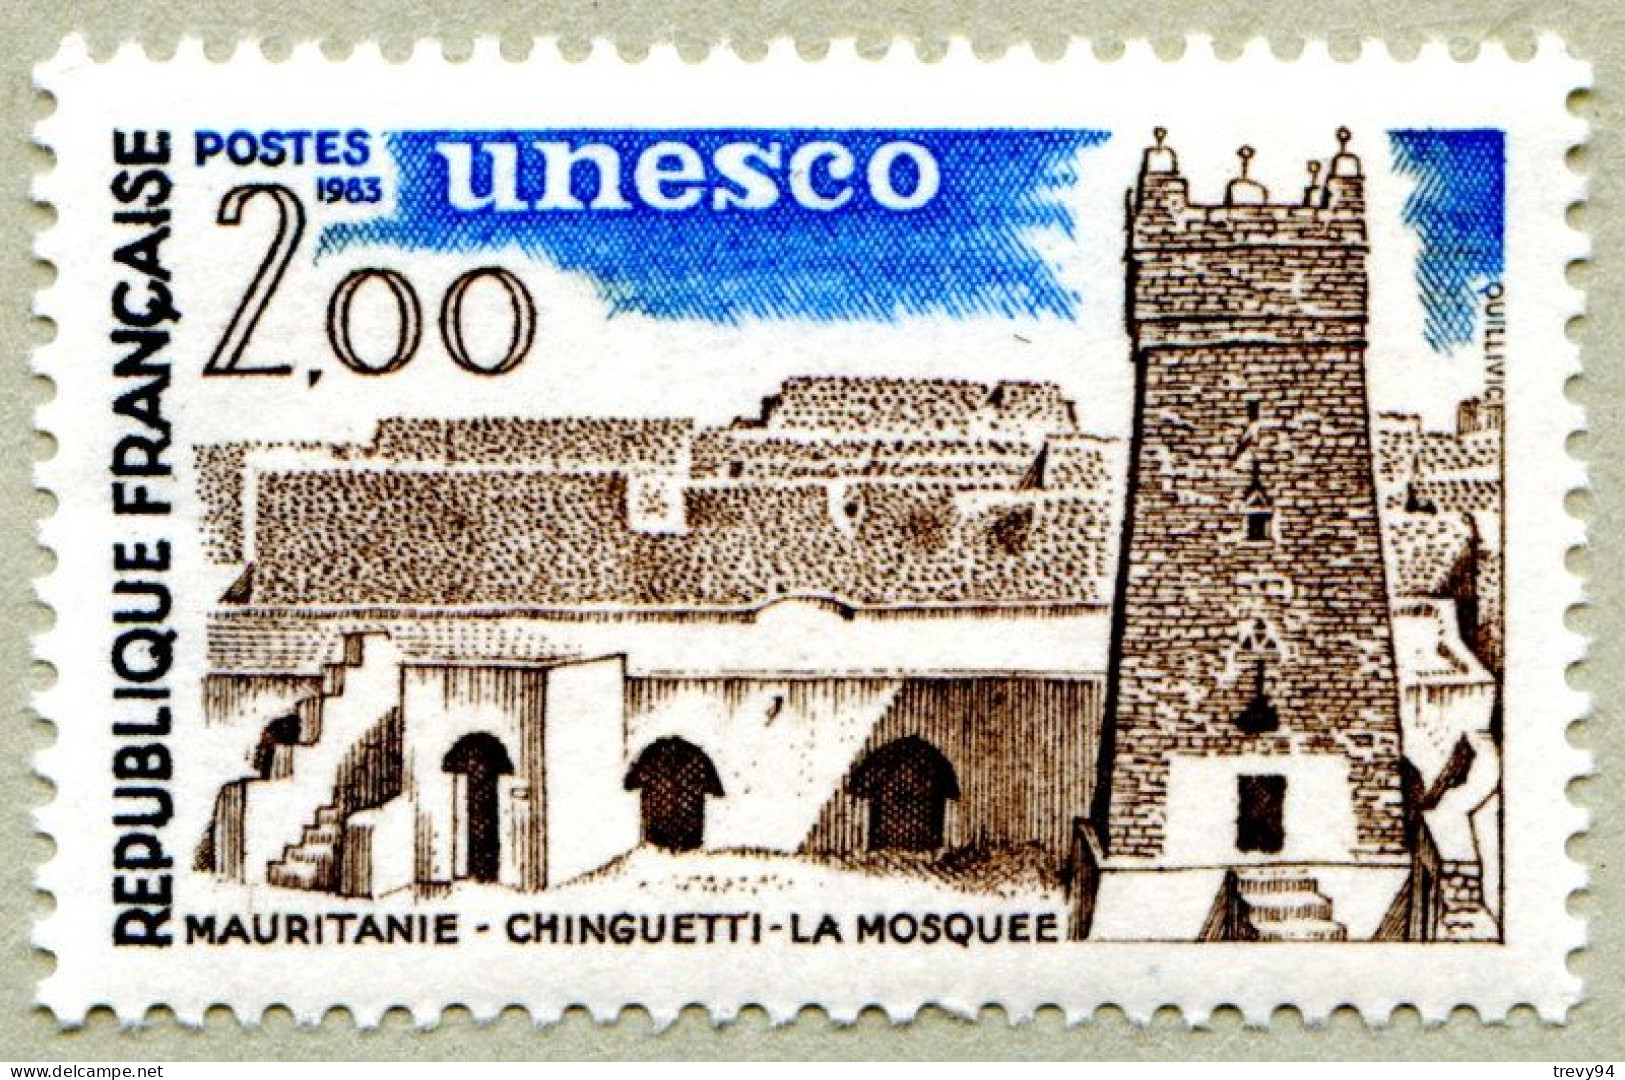 Timbre De Service 1983 - UNESCO Mauritanie Chinguetti - La Mosquée - N° 75 Neuf - Ungebraucht